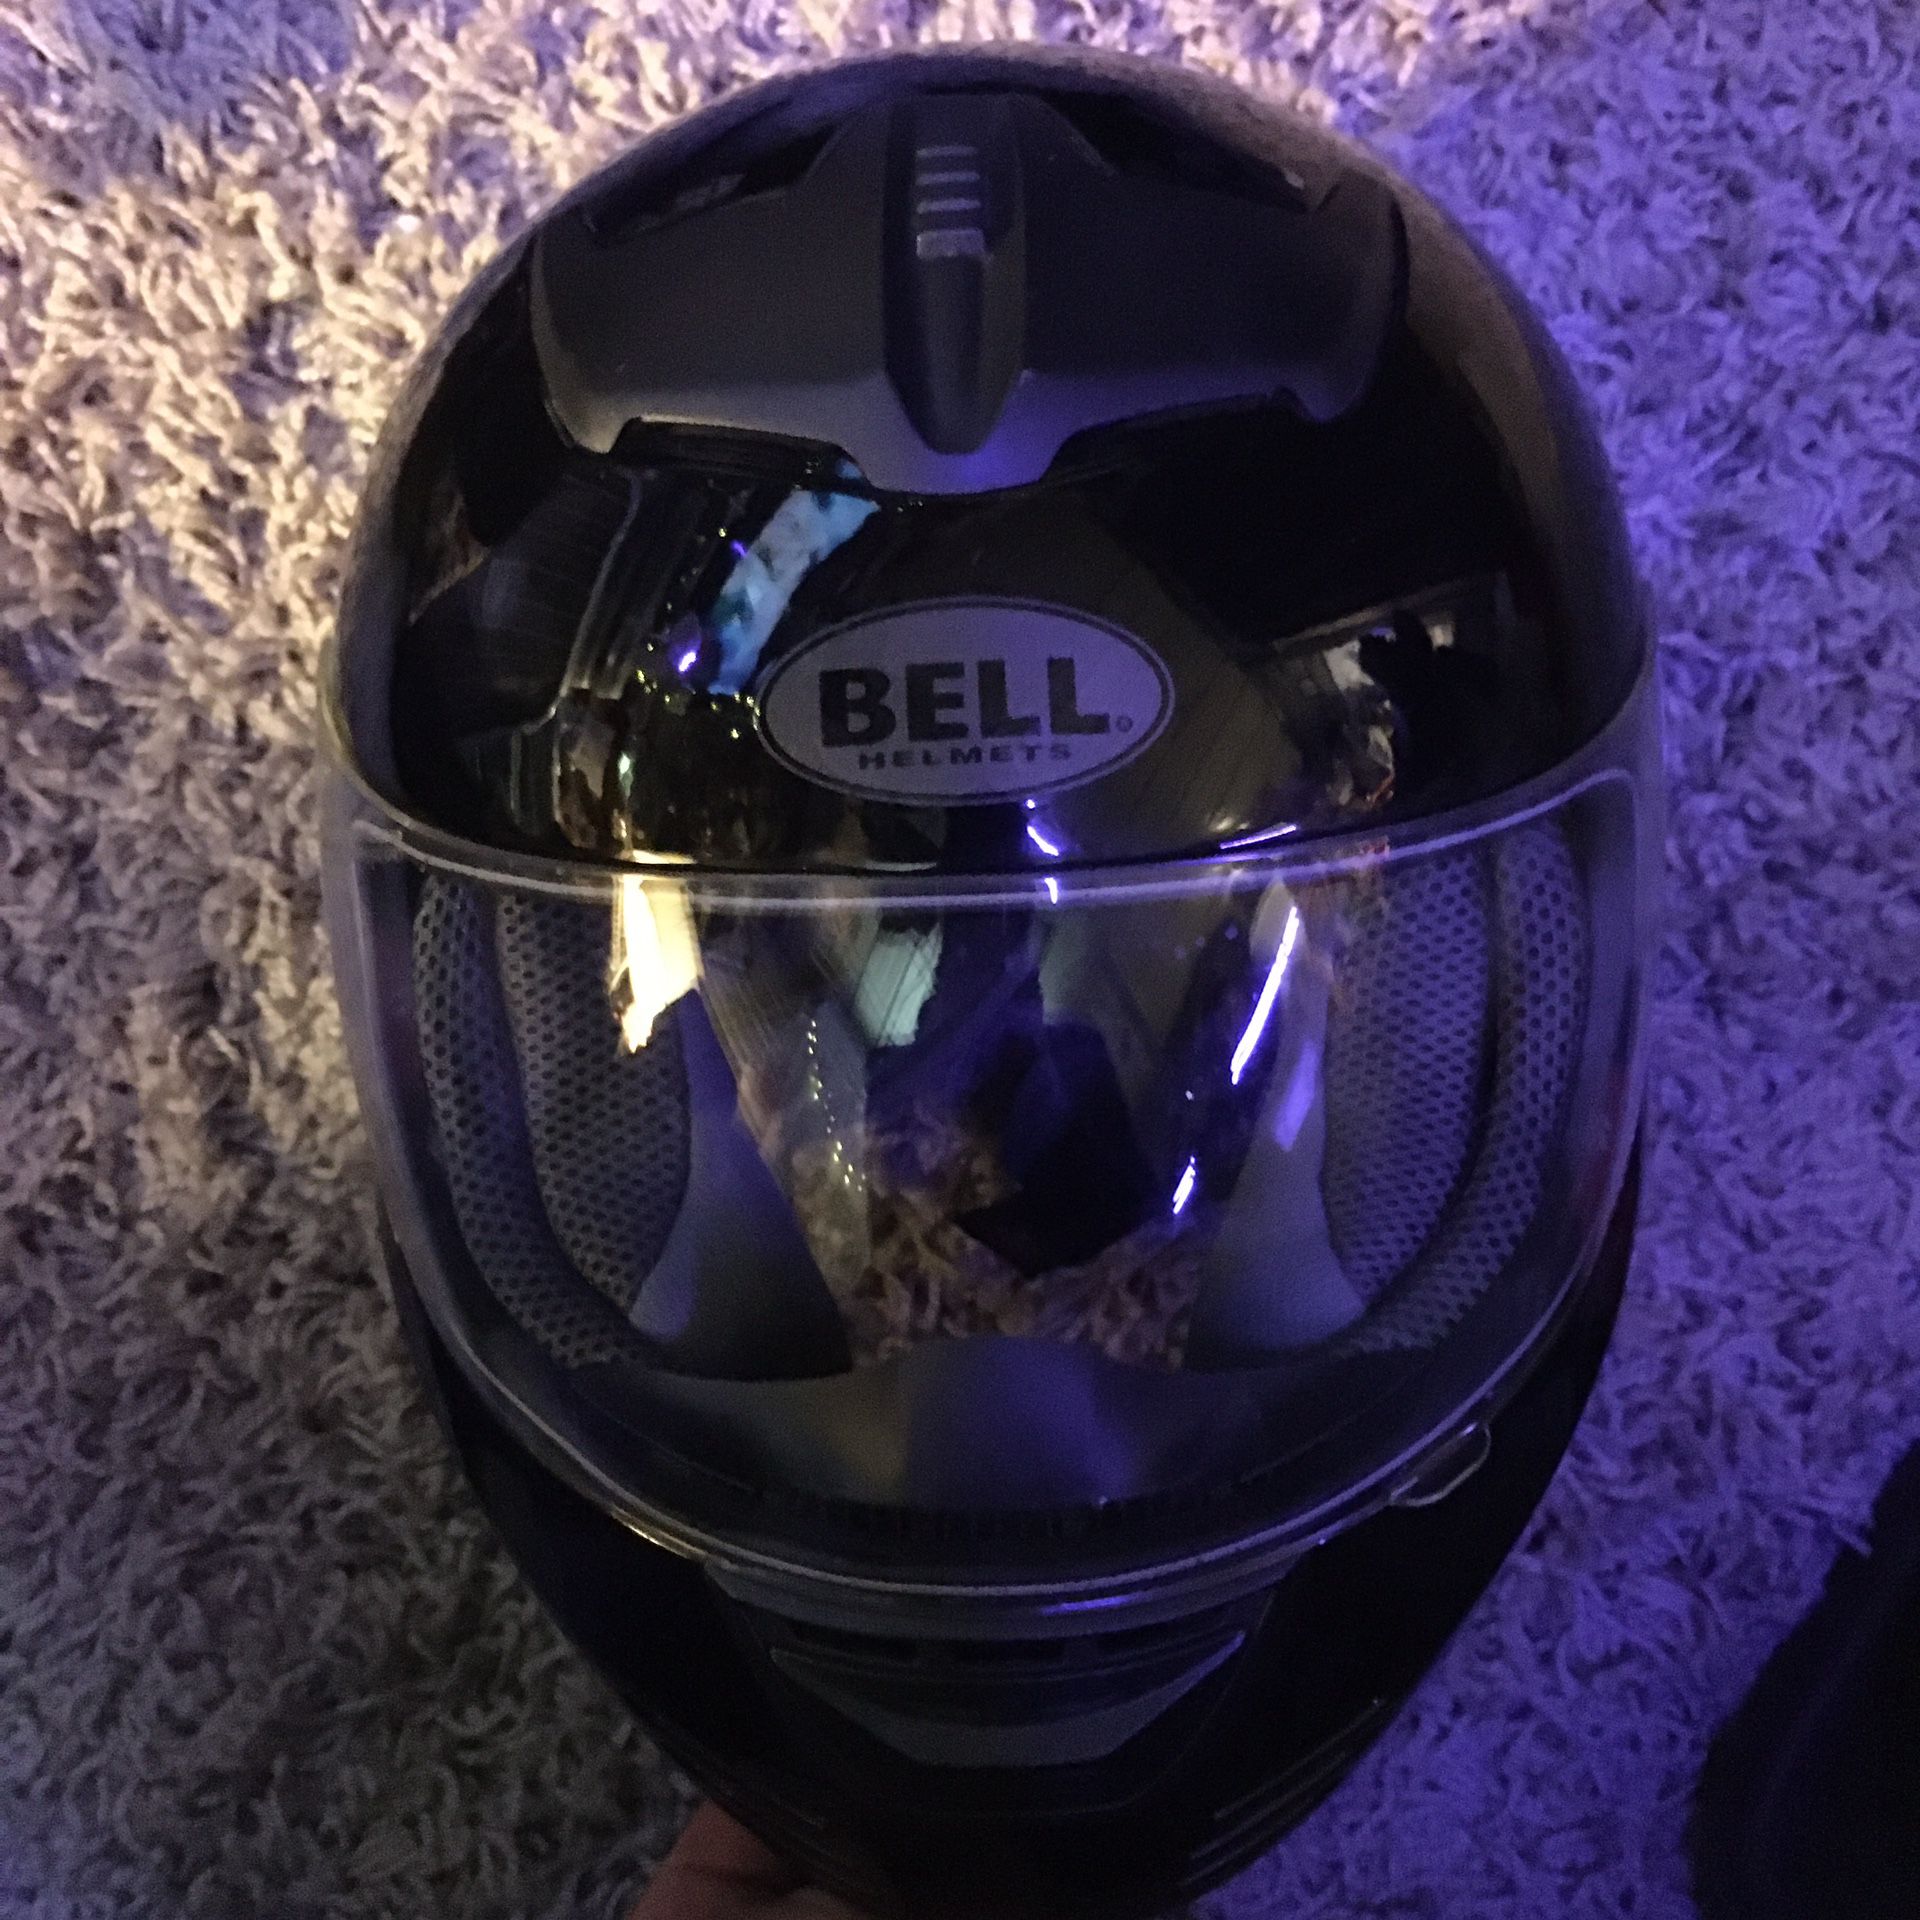 Bell helmet